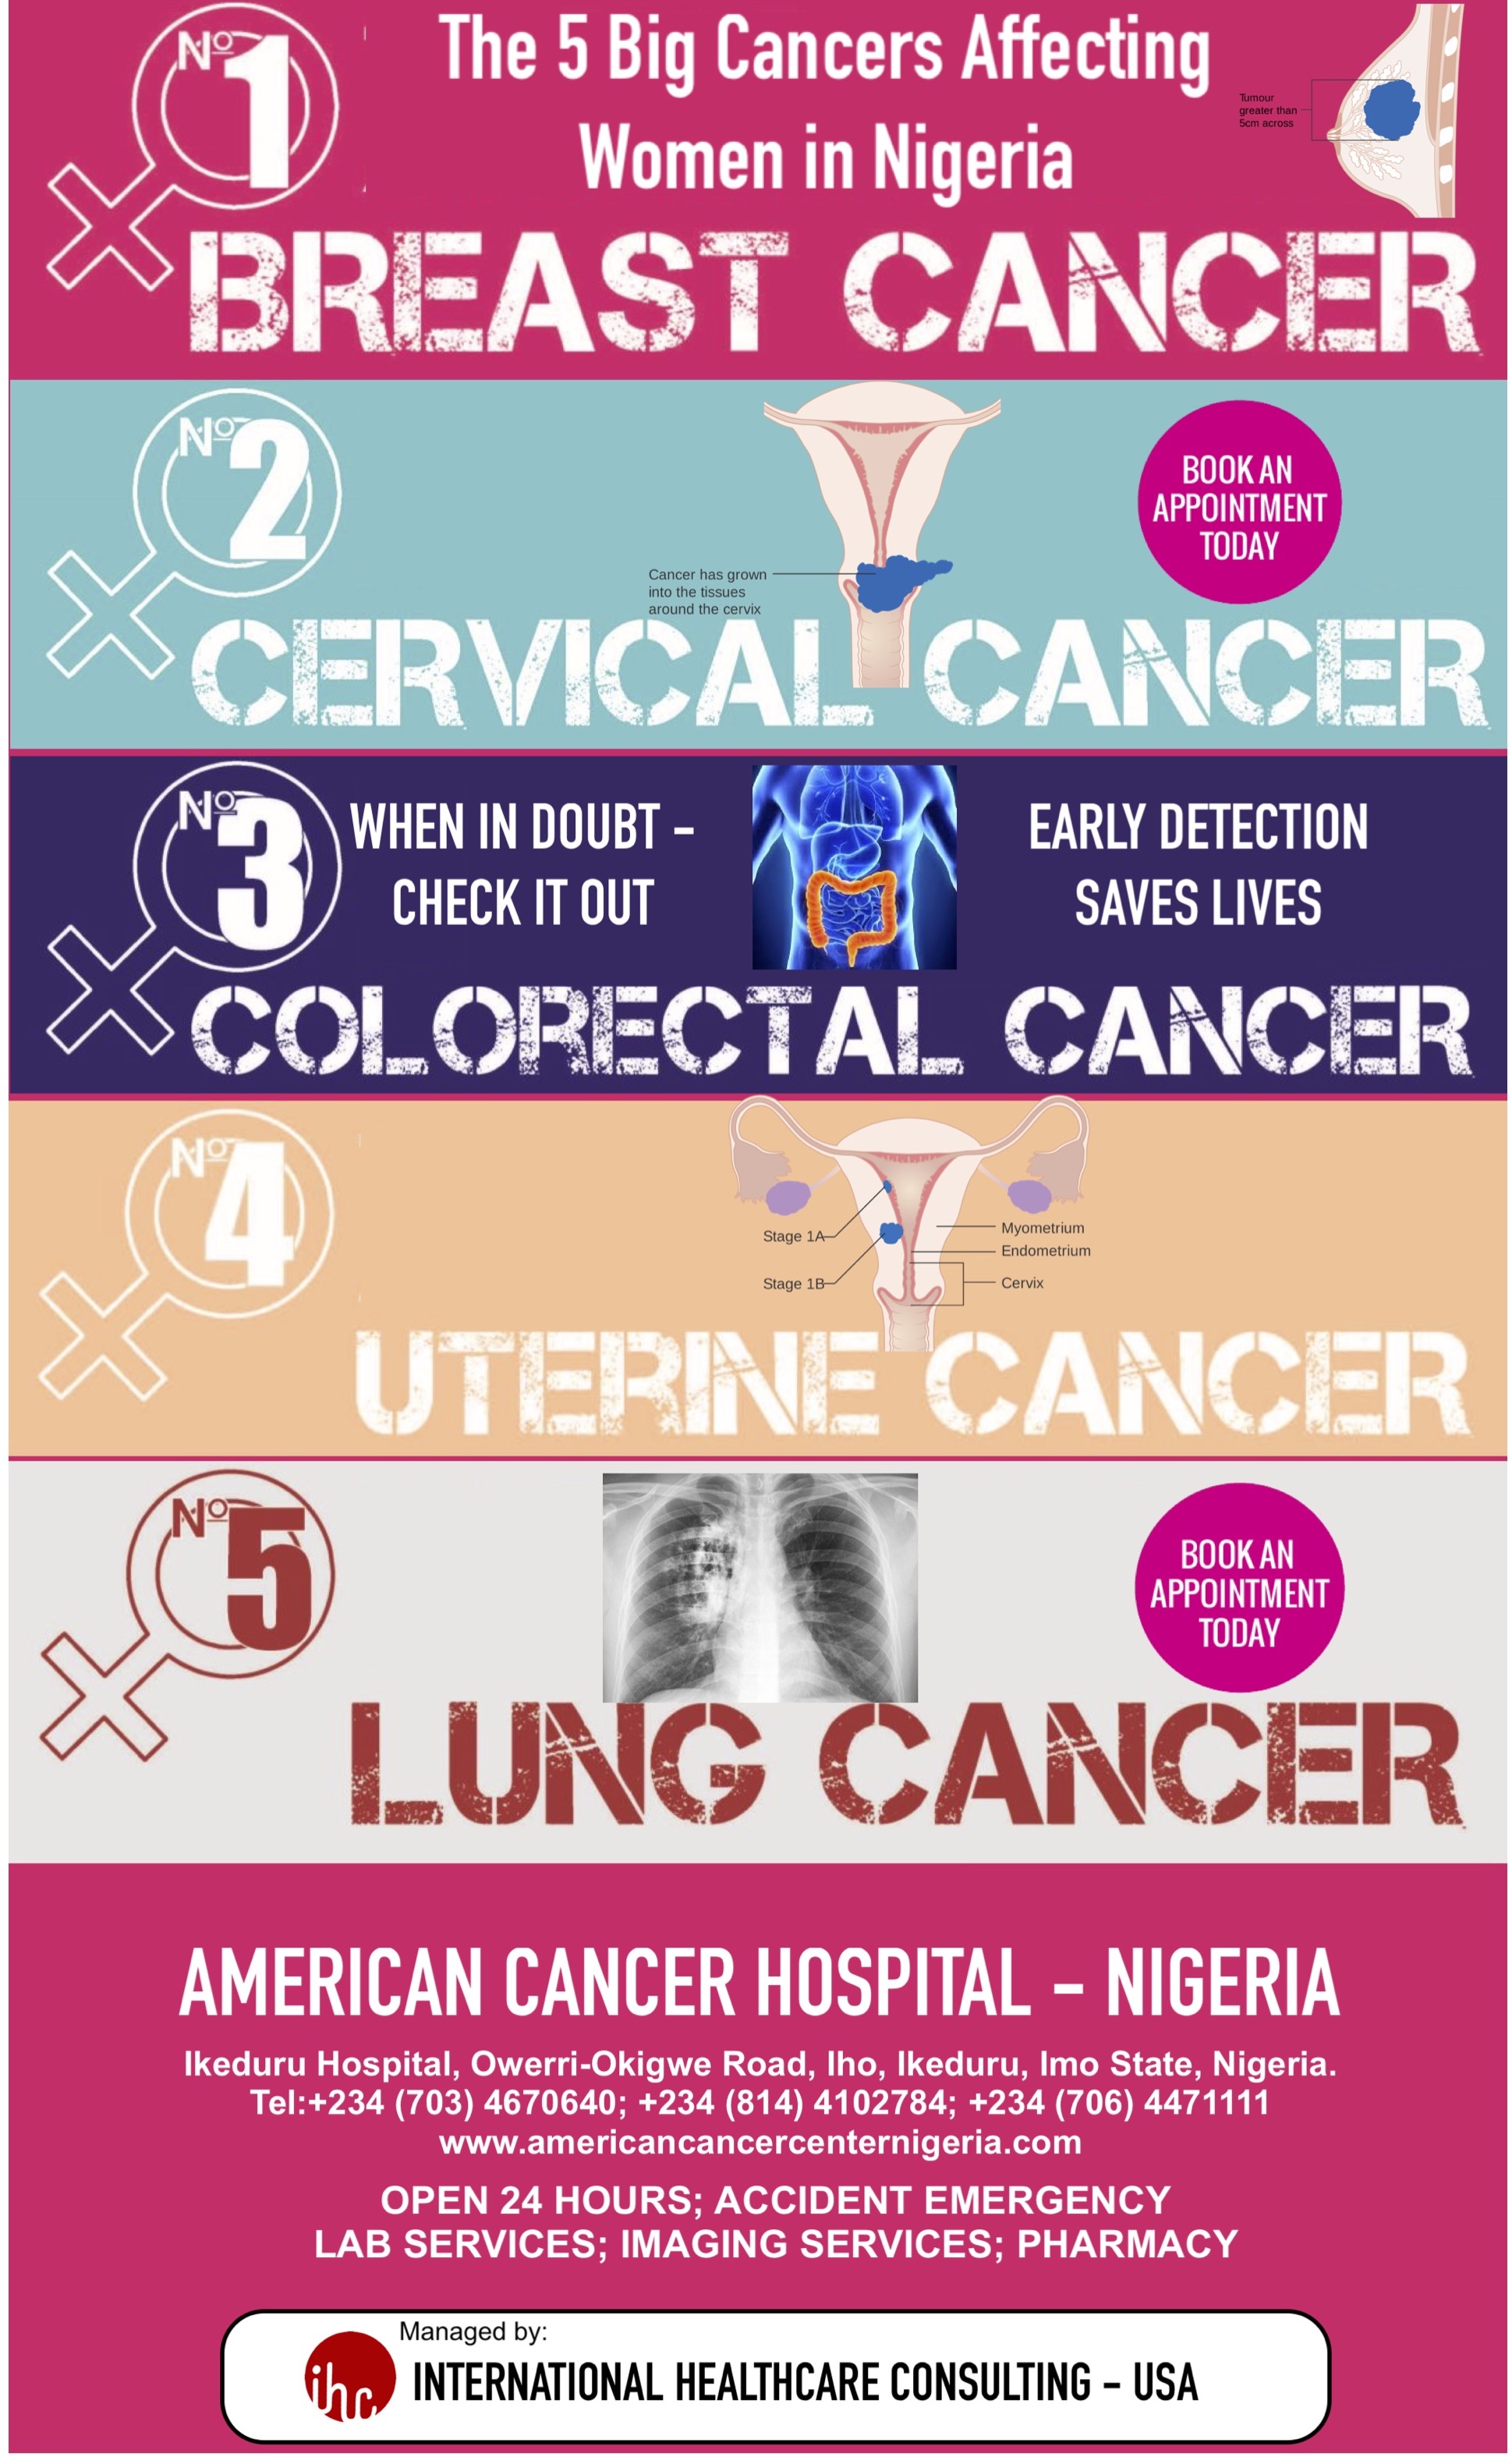 5 BIG CANCERS AFFECTING WOMEN IN NIGERIA